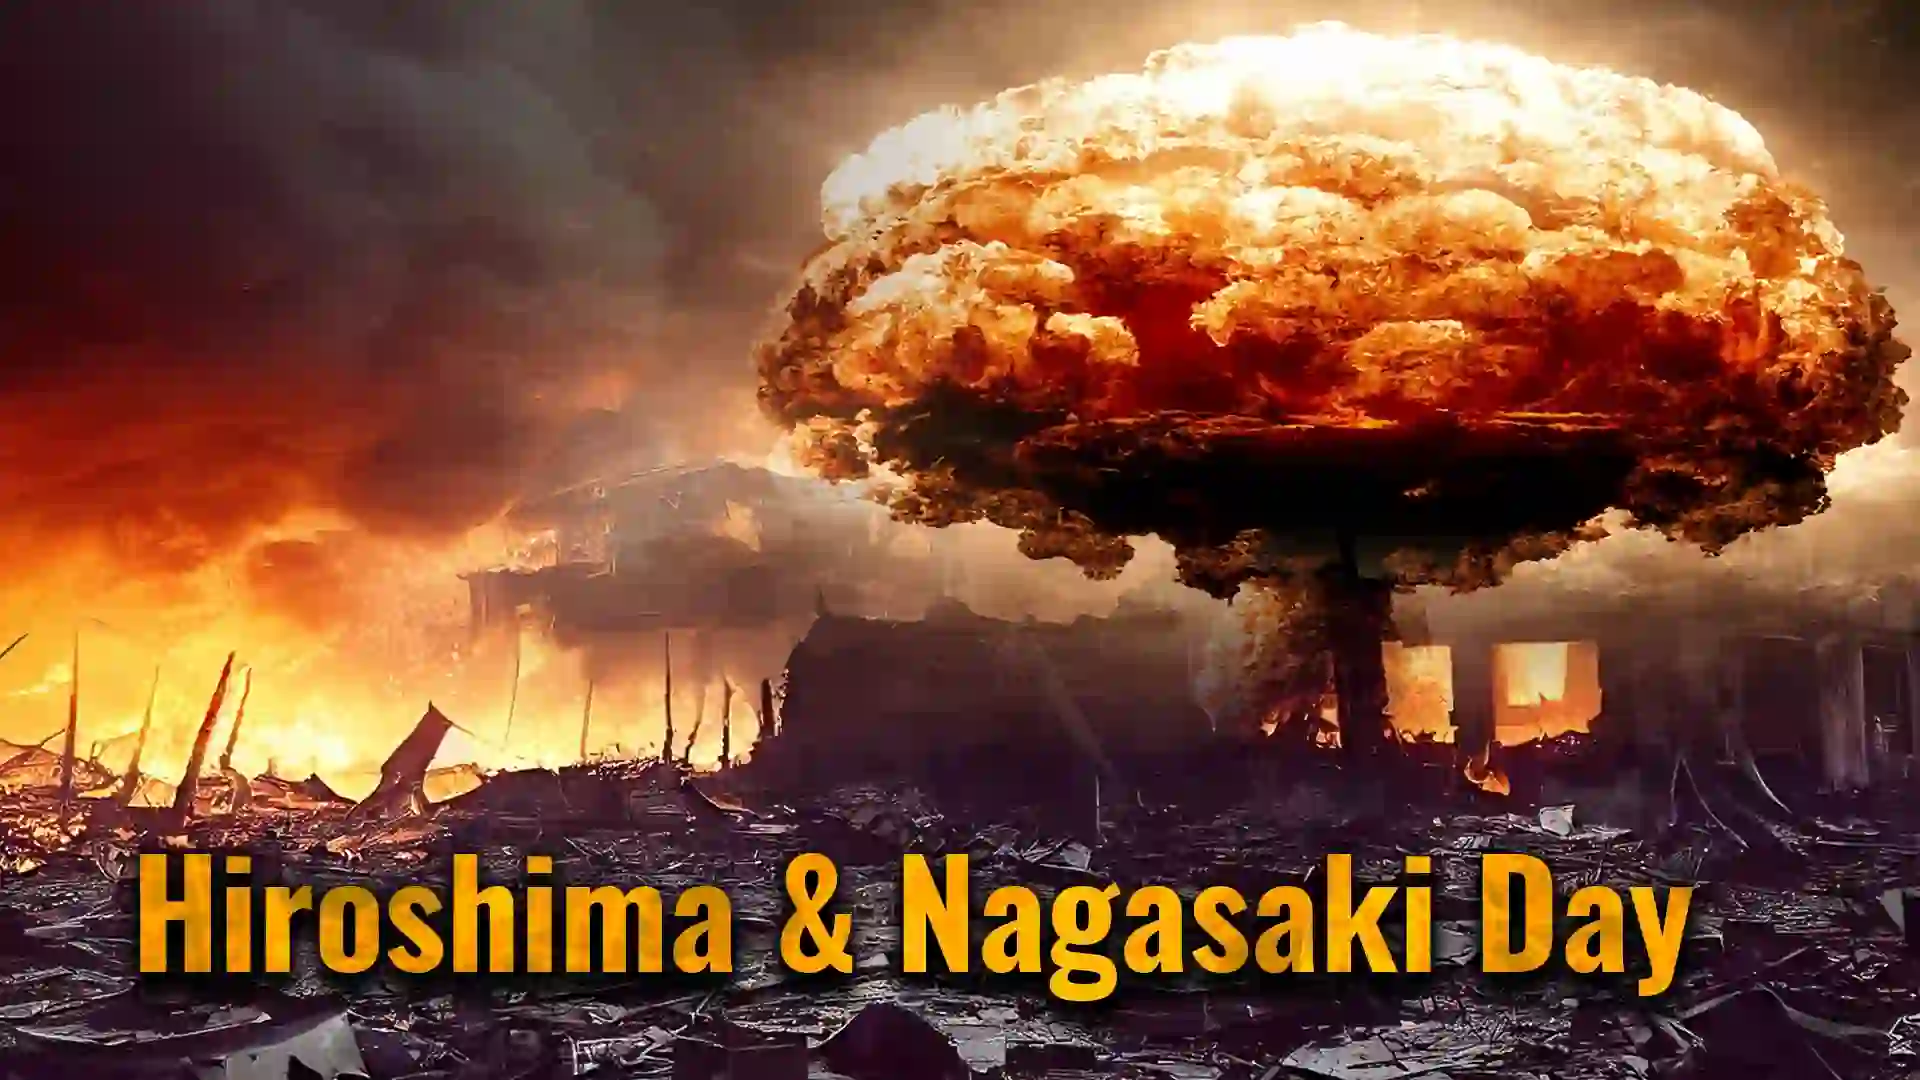 Hiroshima and Nagasaki Day This Post Design By The Revolution Deshbhakt Hindustani